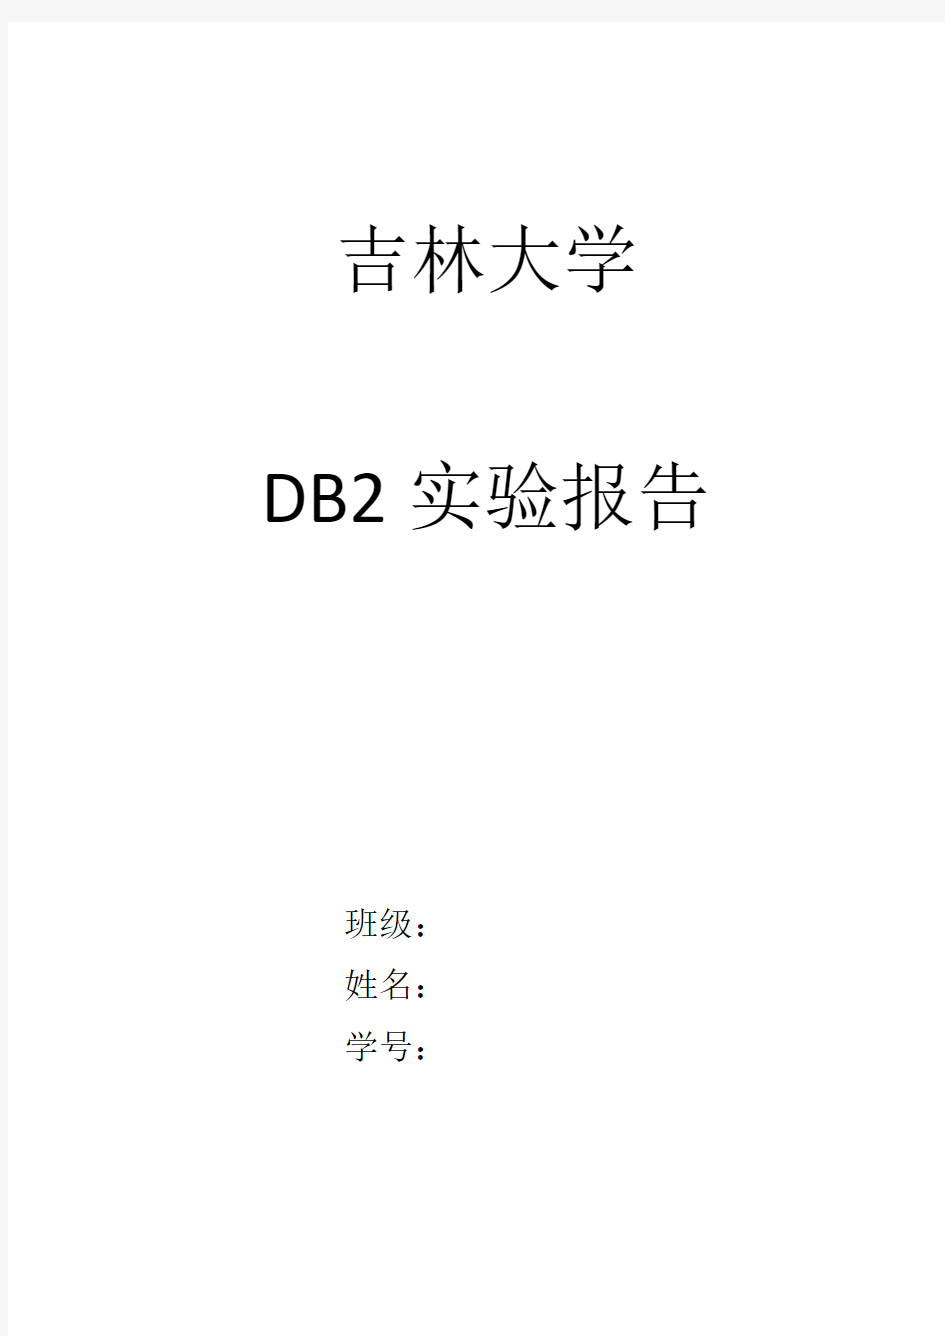 DB2实验报告9_学号_姓名